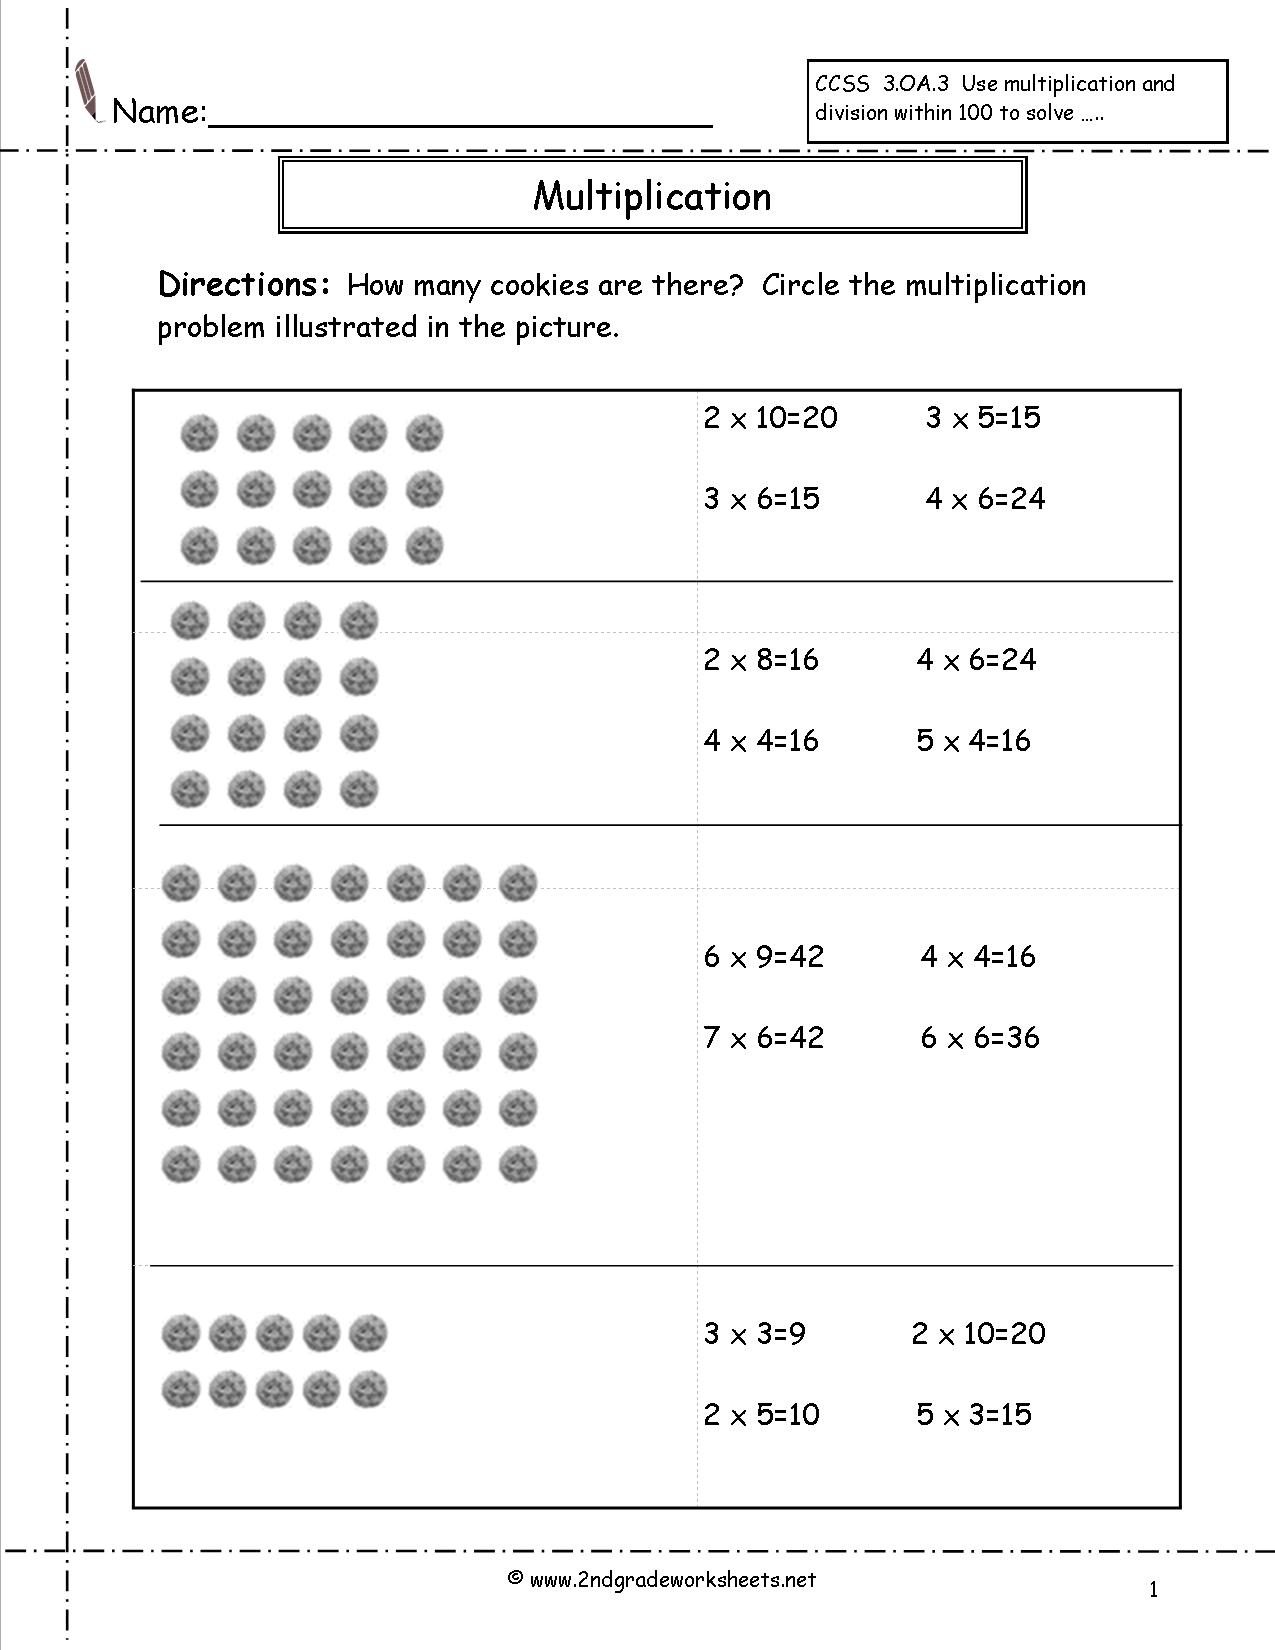 15-best-images-of-division-as-arrays-worksheet-array-multiplication-worksheet-division-using